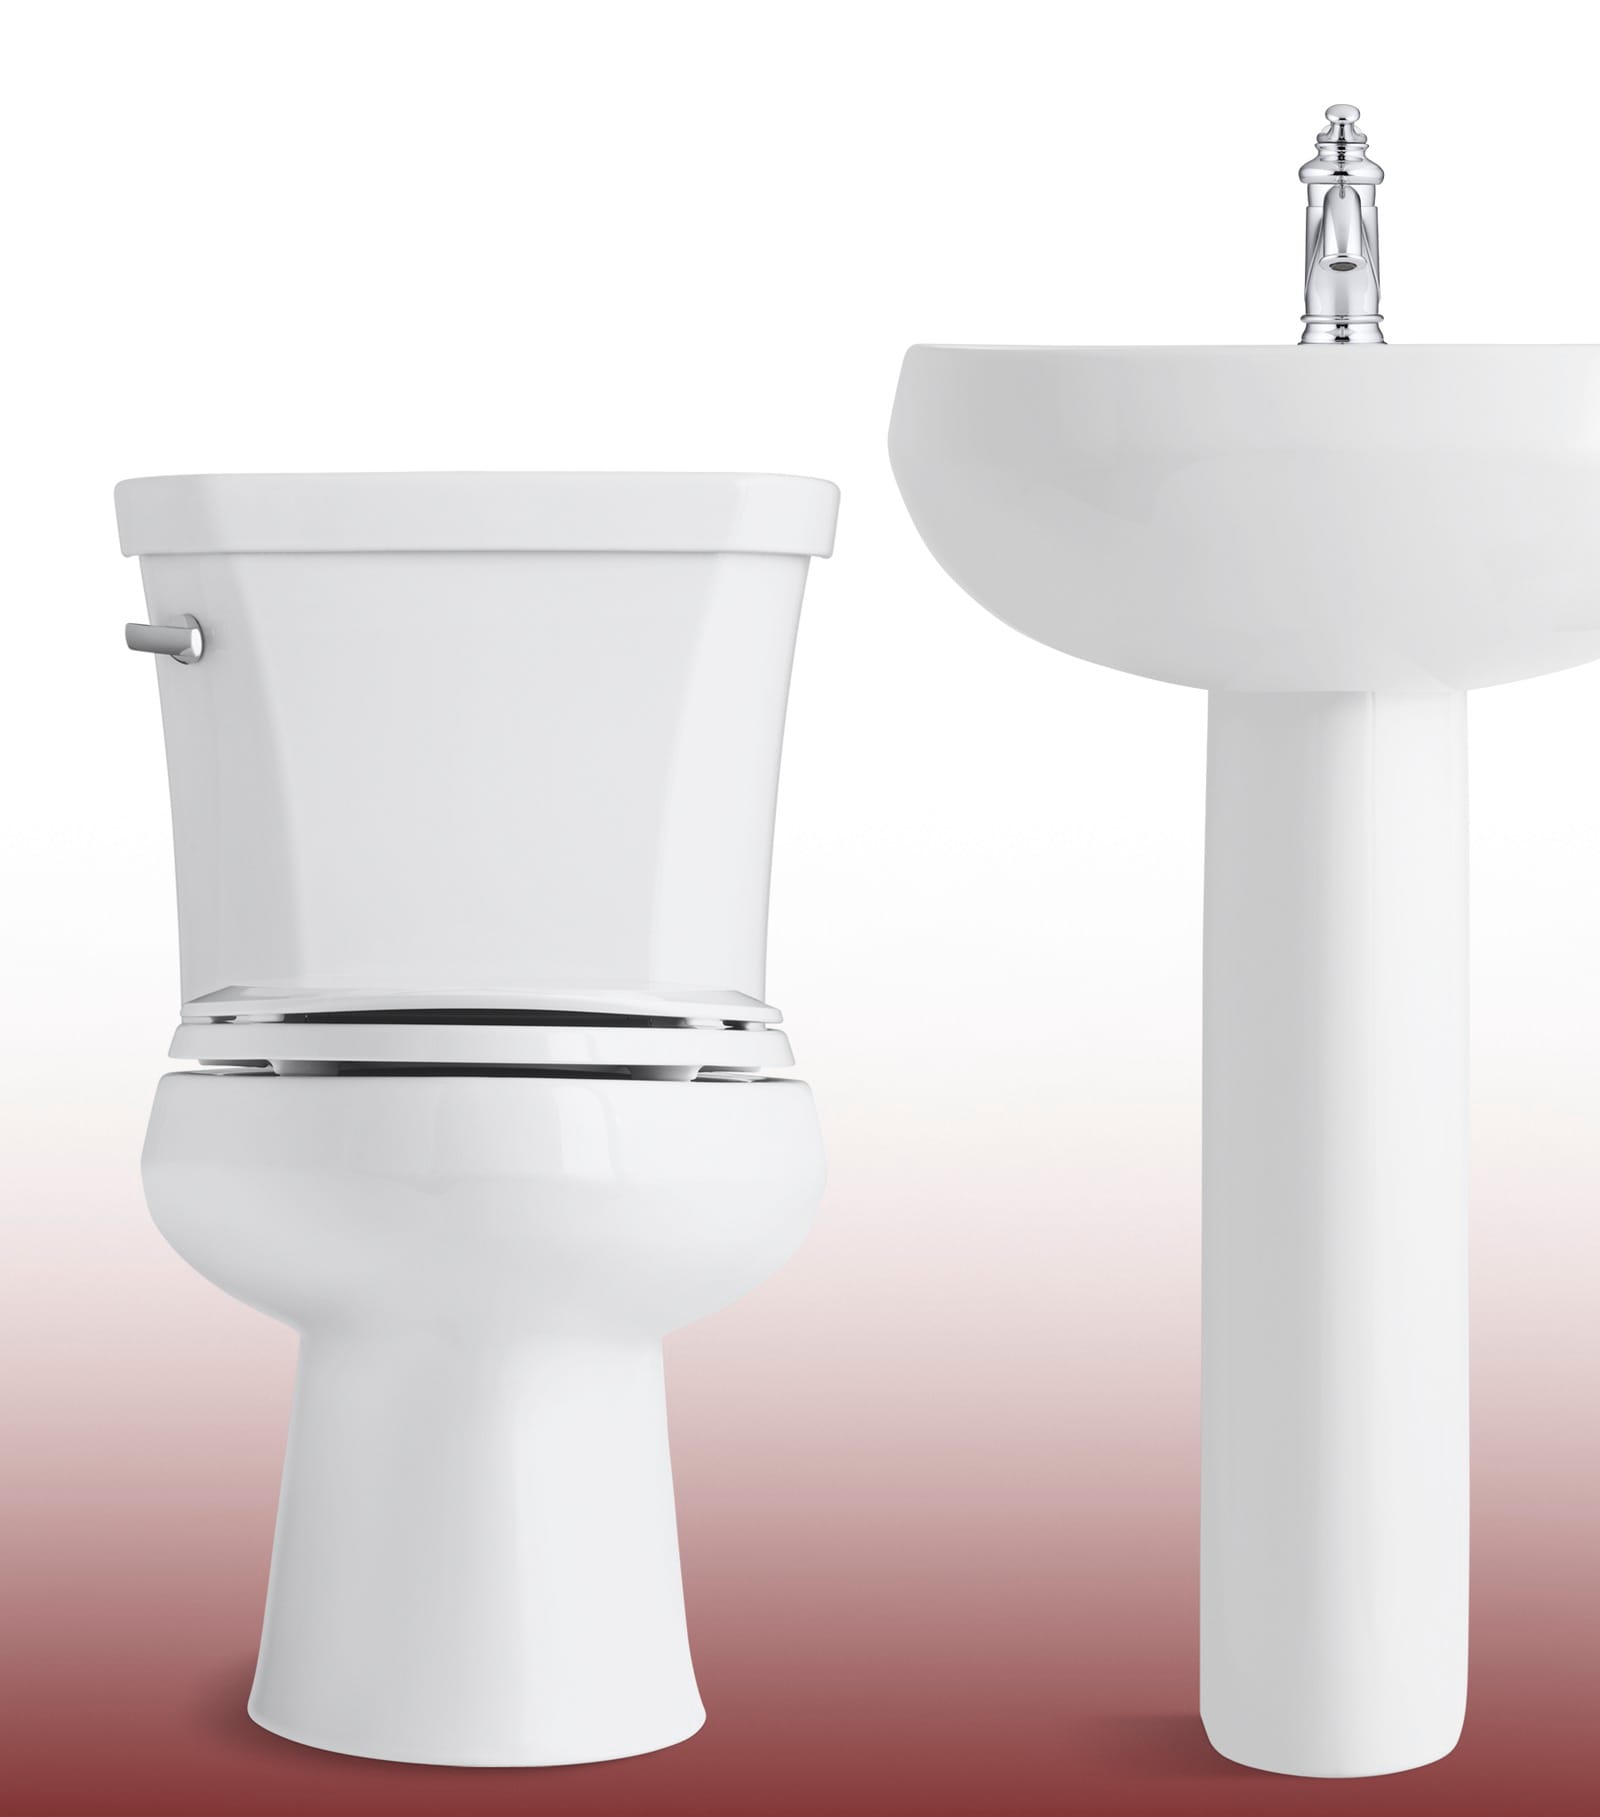 Kohler ?12182-CP Fairfax Bathroom Faucet, Polished Chrome 